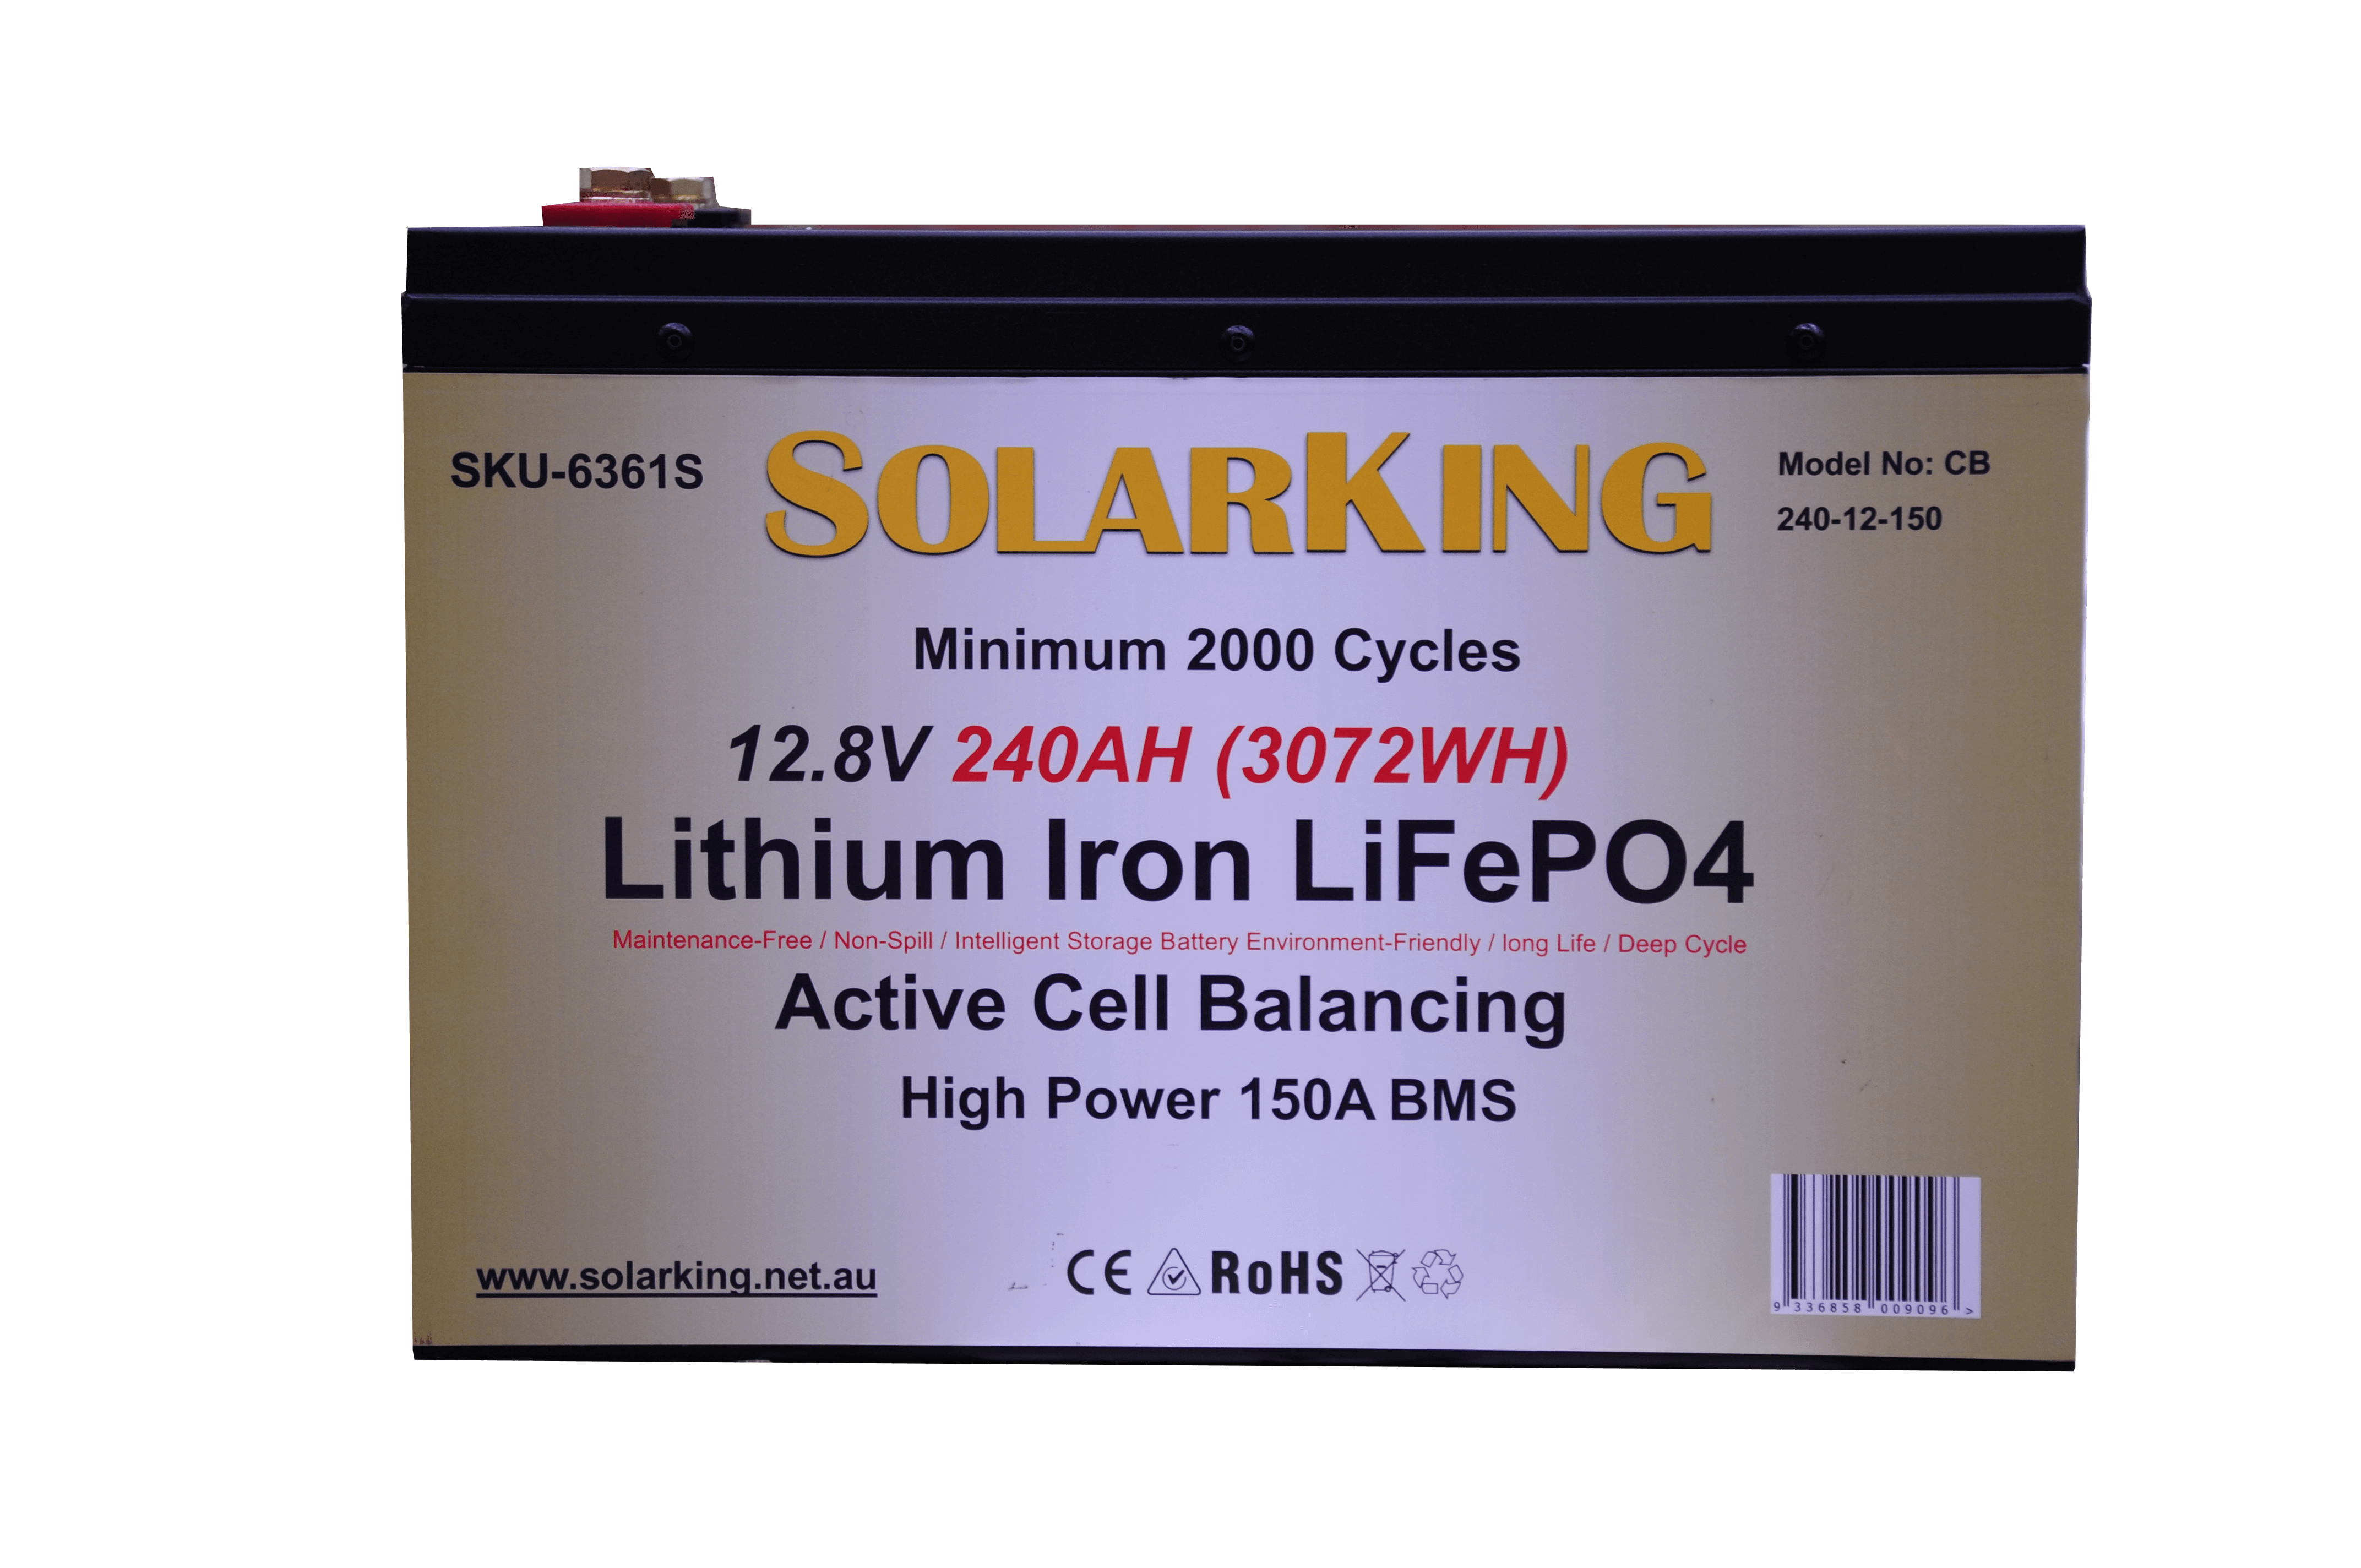 240AH Lithium Iron SolarKing Battery CB-240-12-150